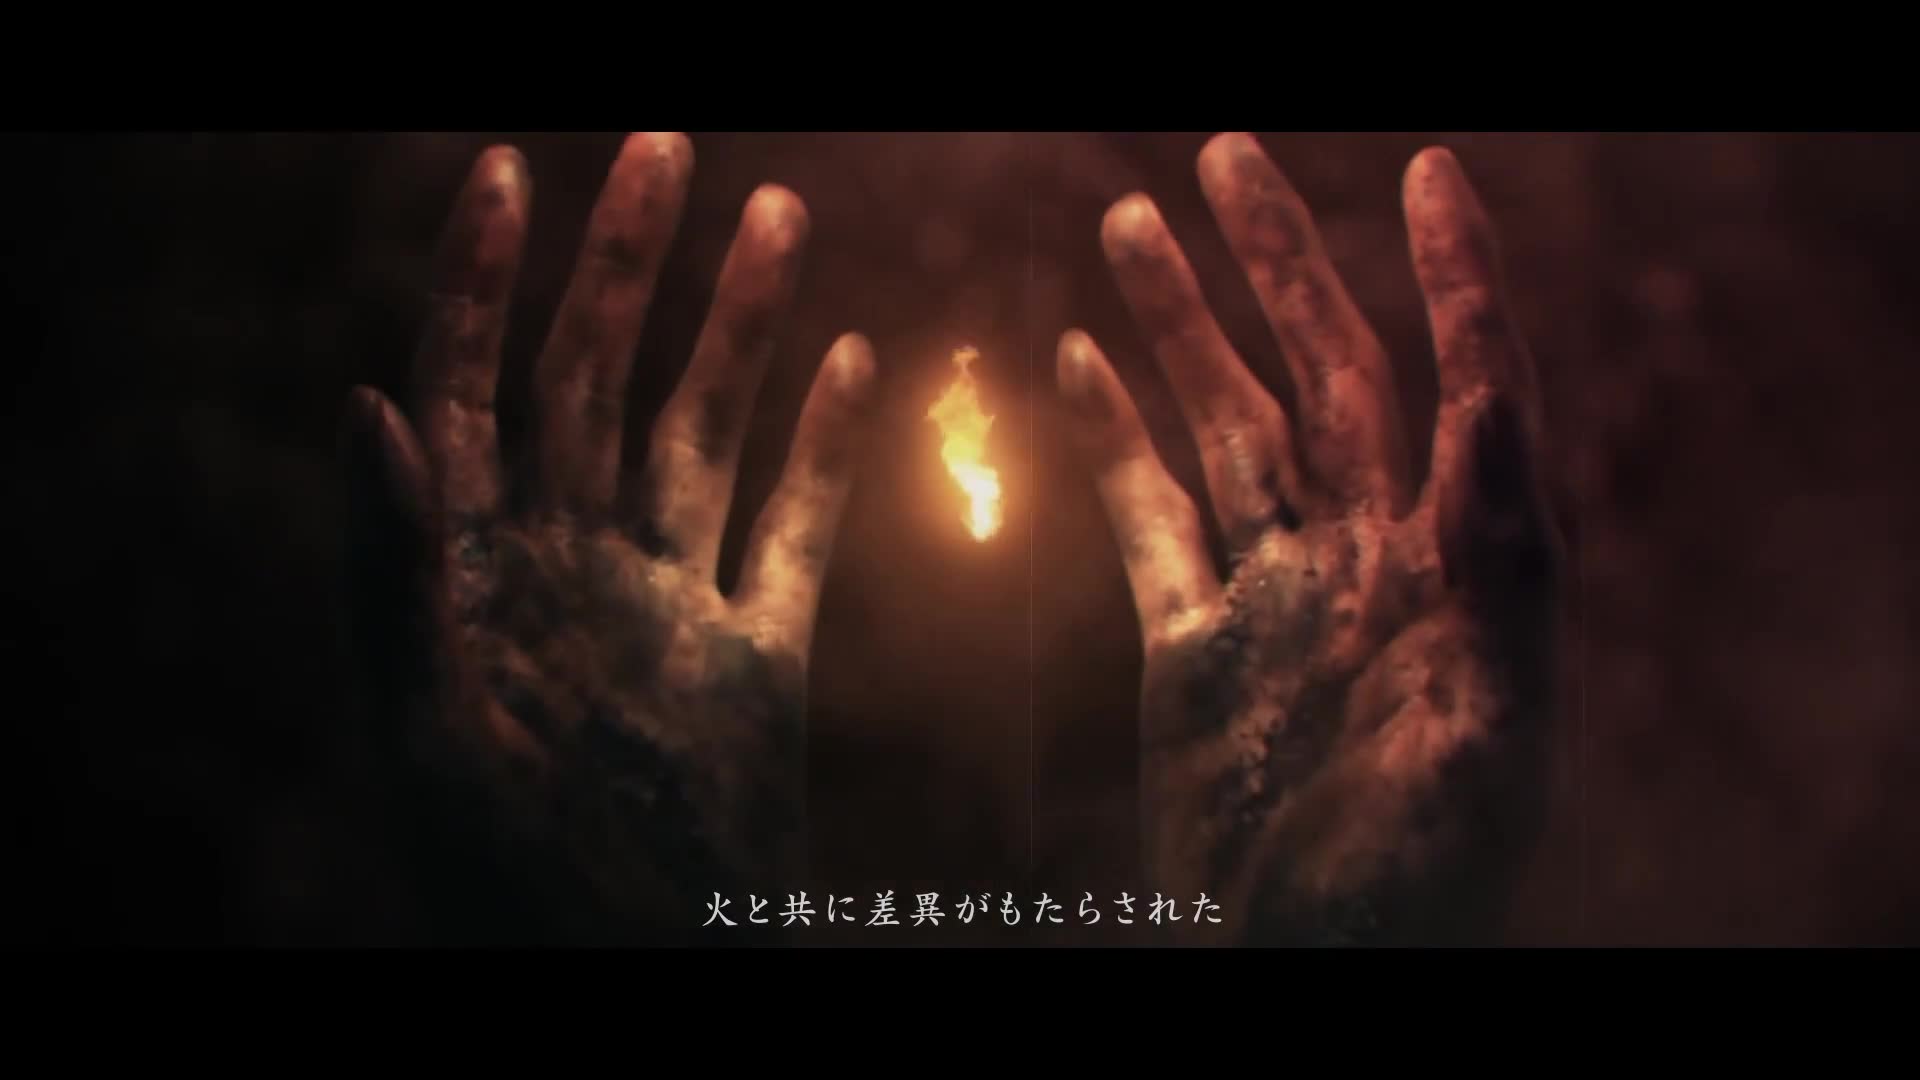 Dark Souls 3 - launch trailer